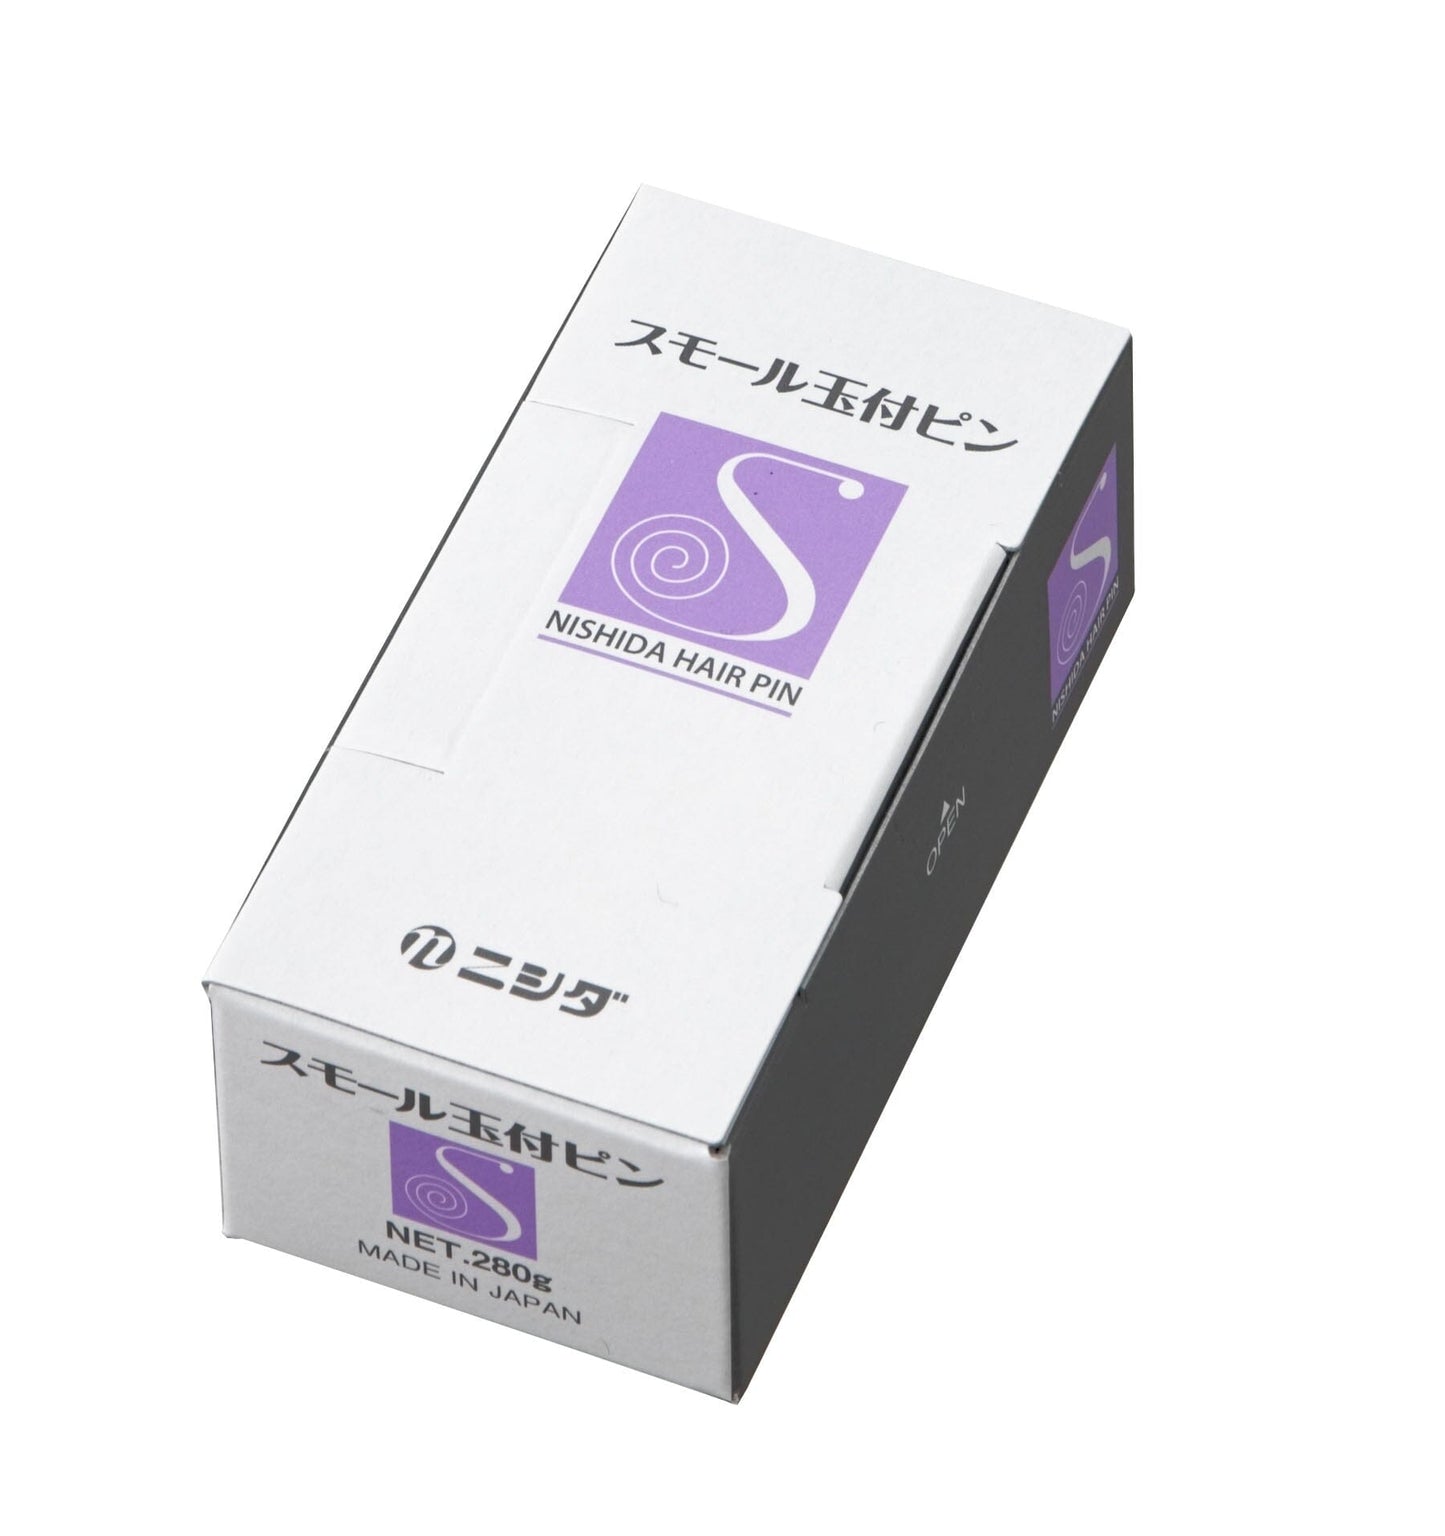 004 S Purple N004-0223-99 Small tamatsuki Pin 280g.jpg